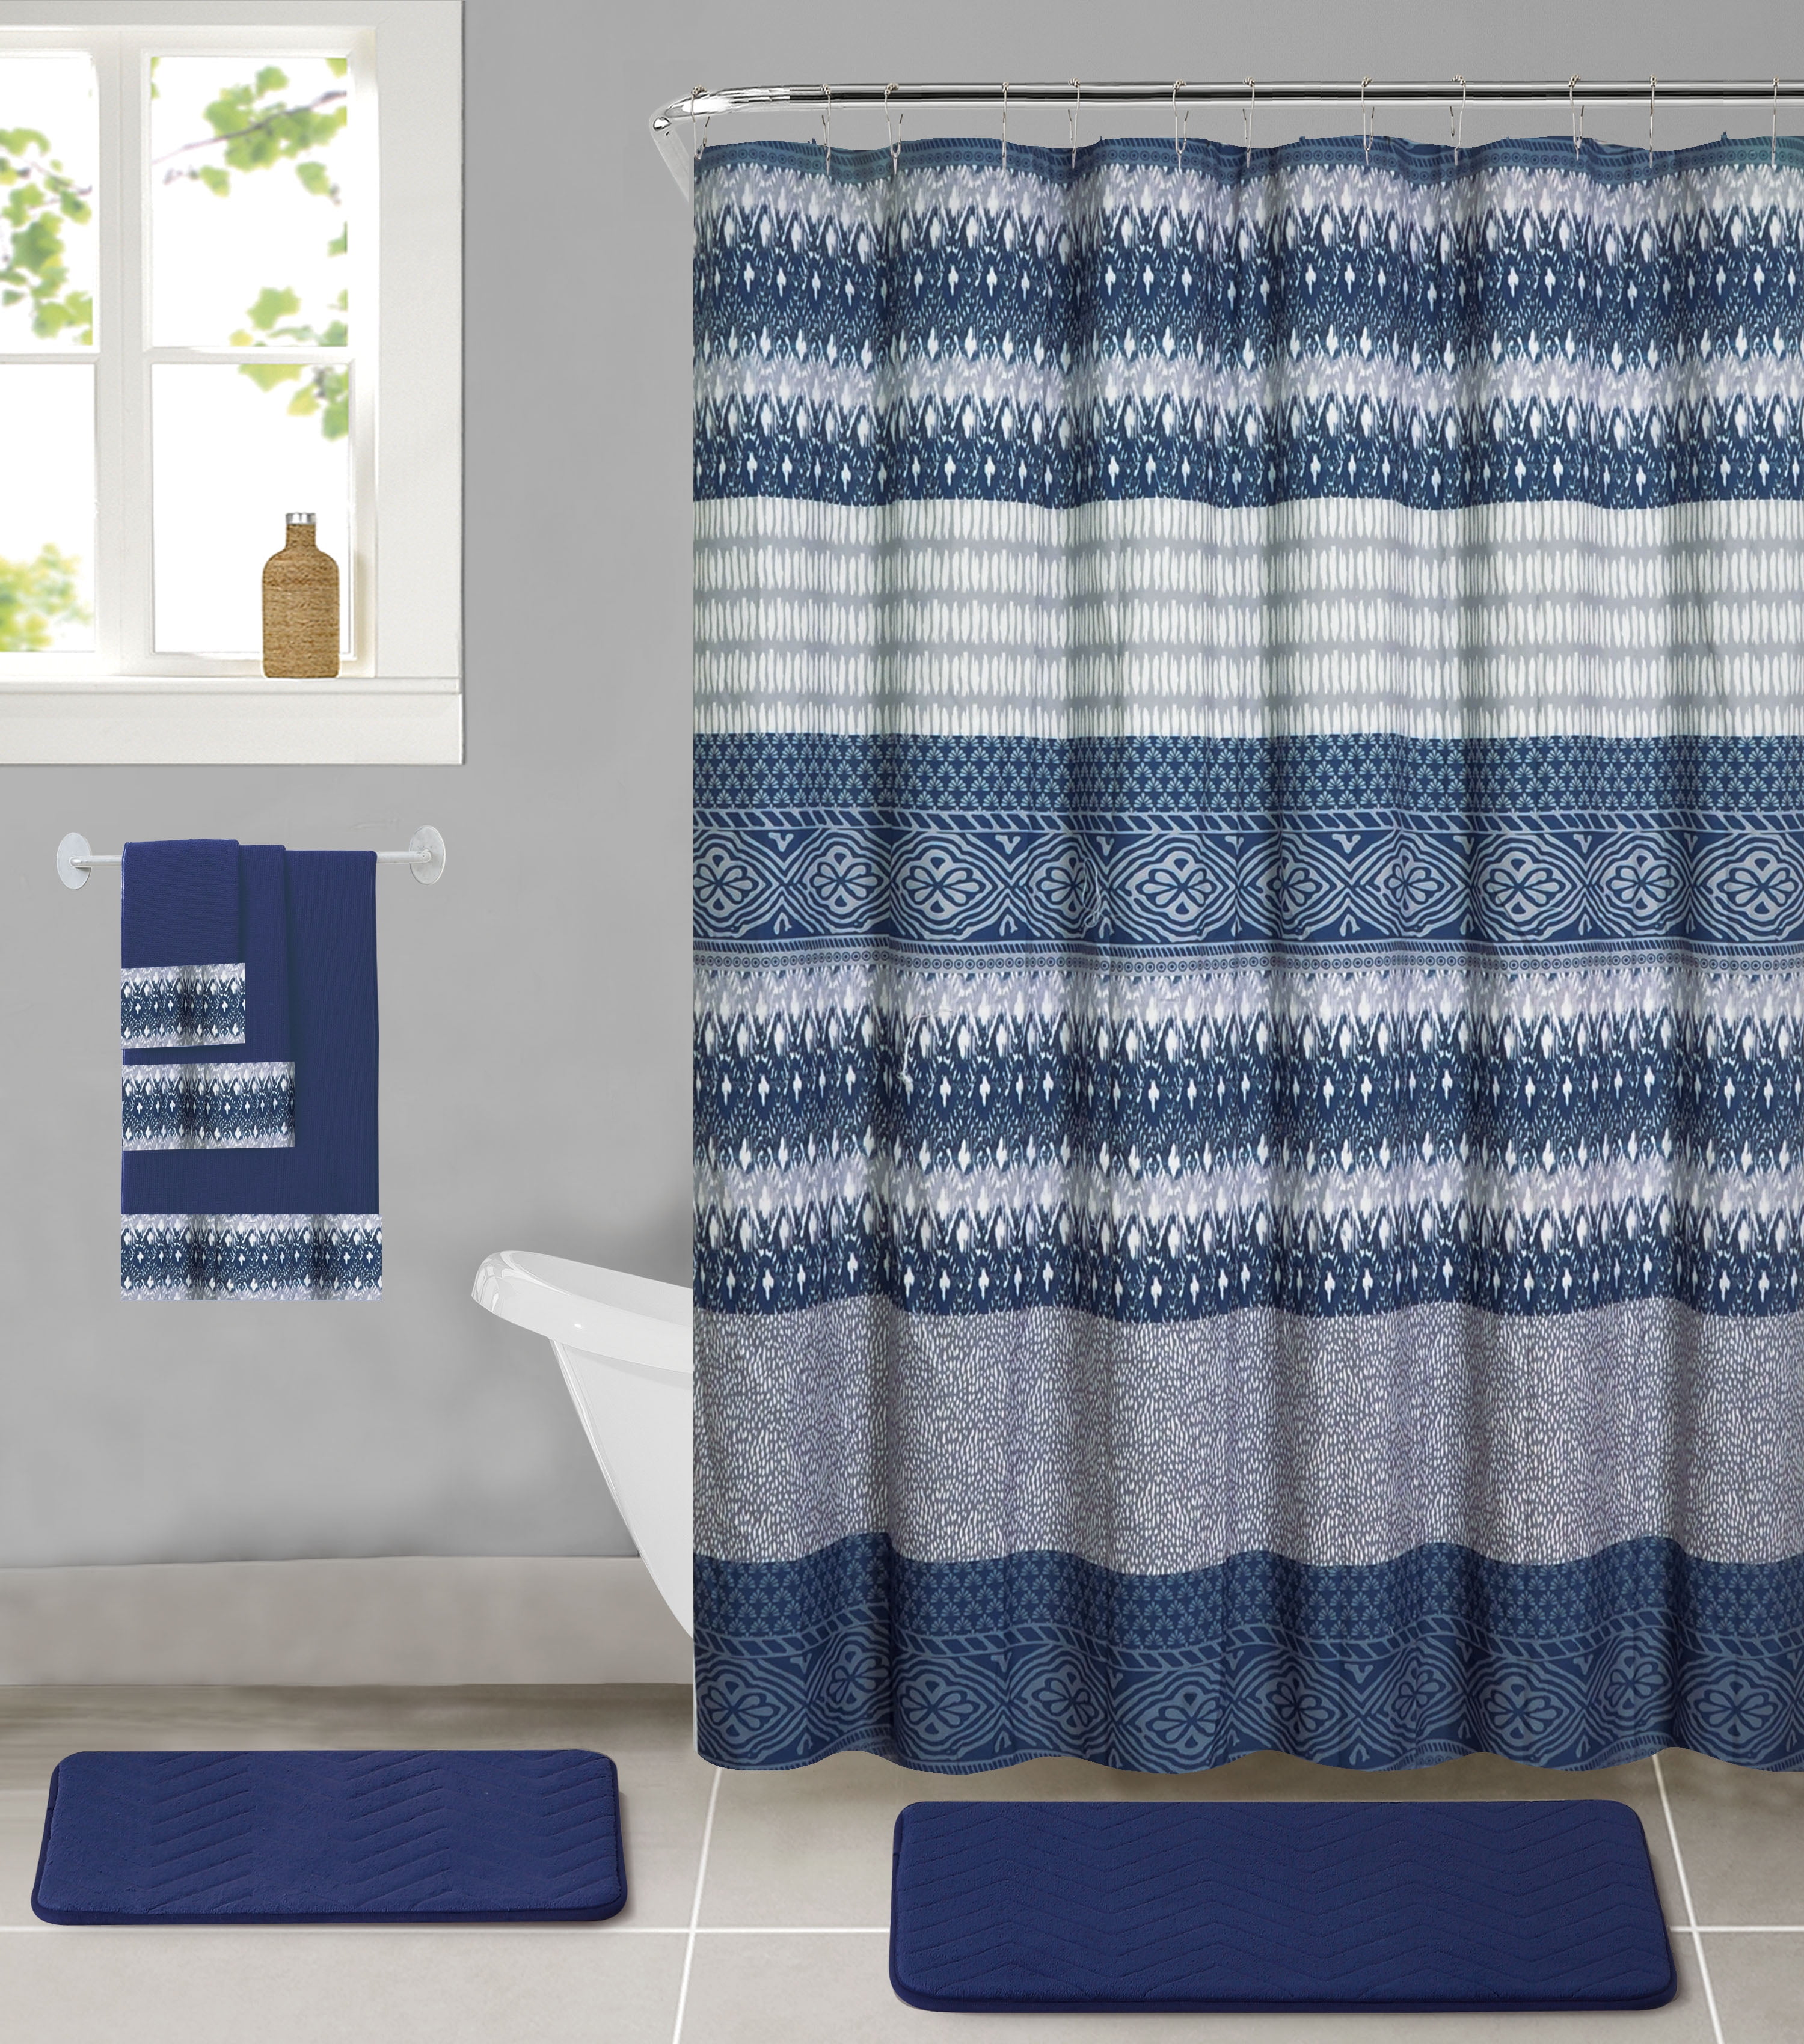 Details about   Orange Cat Face Shower Curtain Bathroom Decor Fabric & 12hooks 71 Inch 